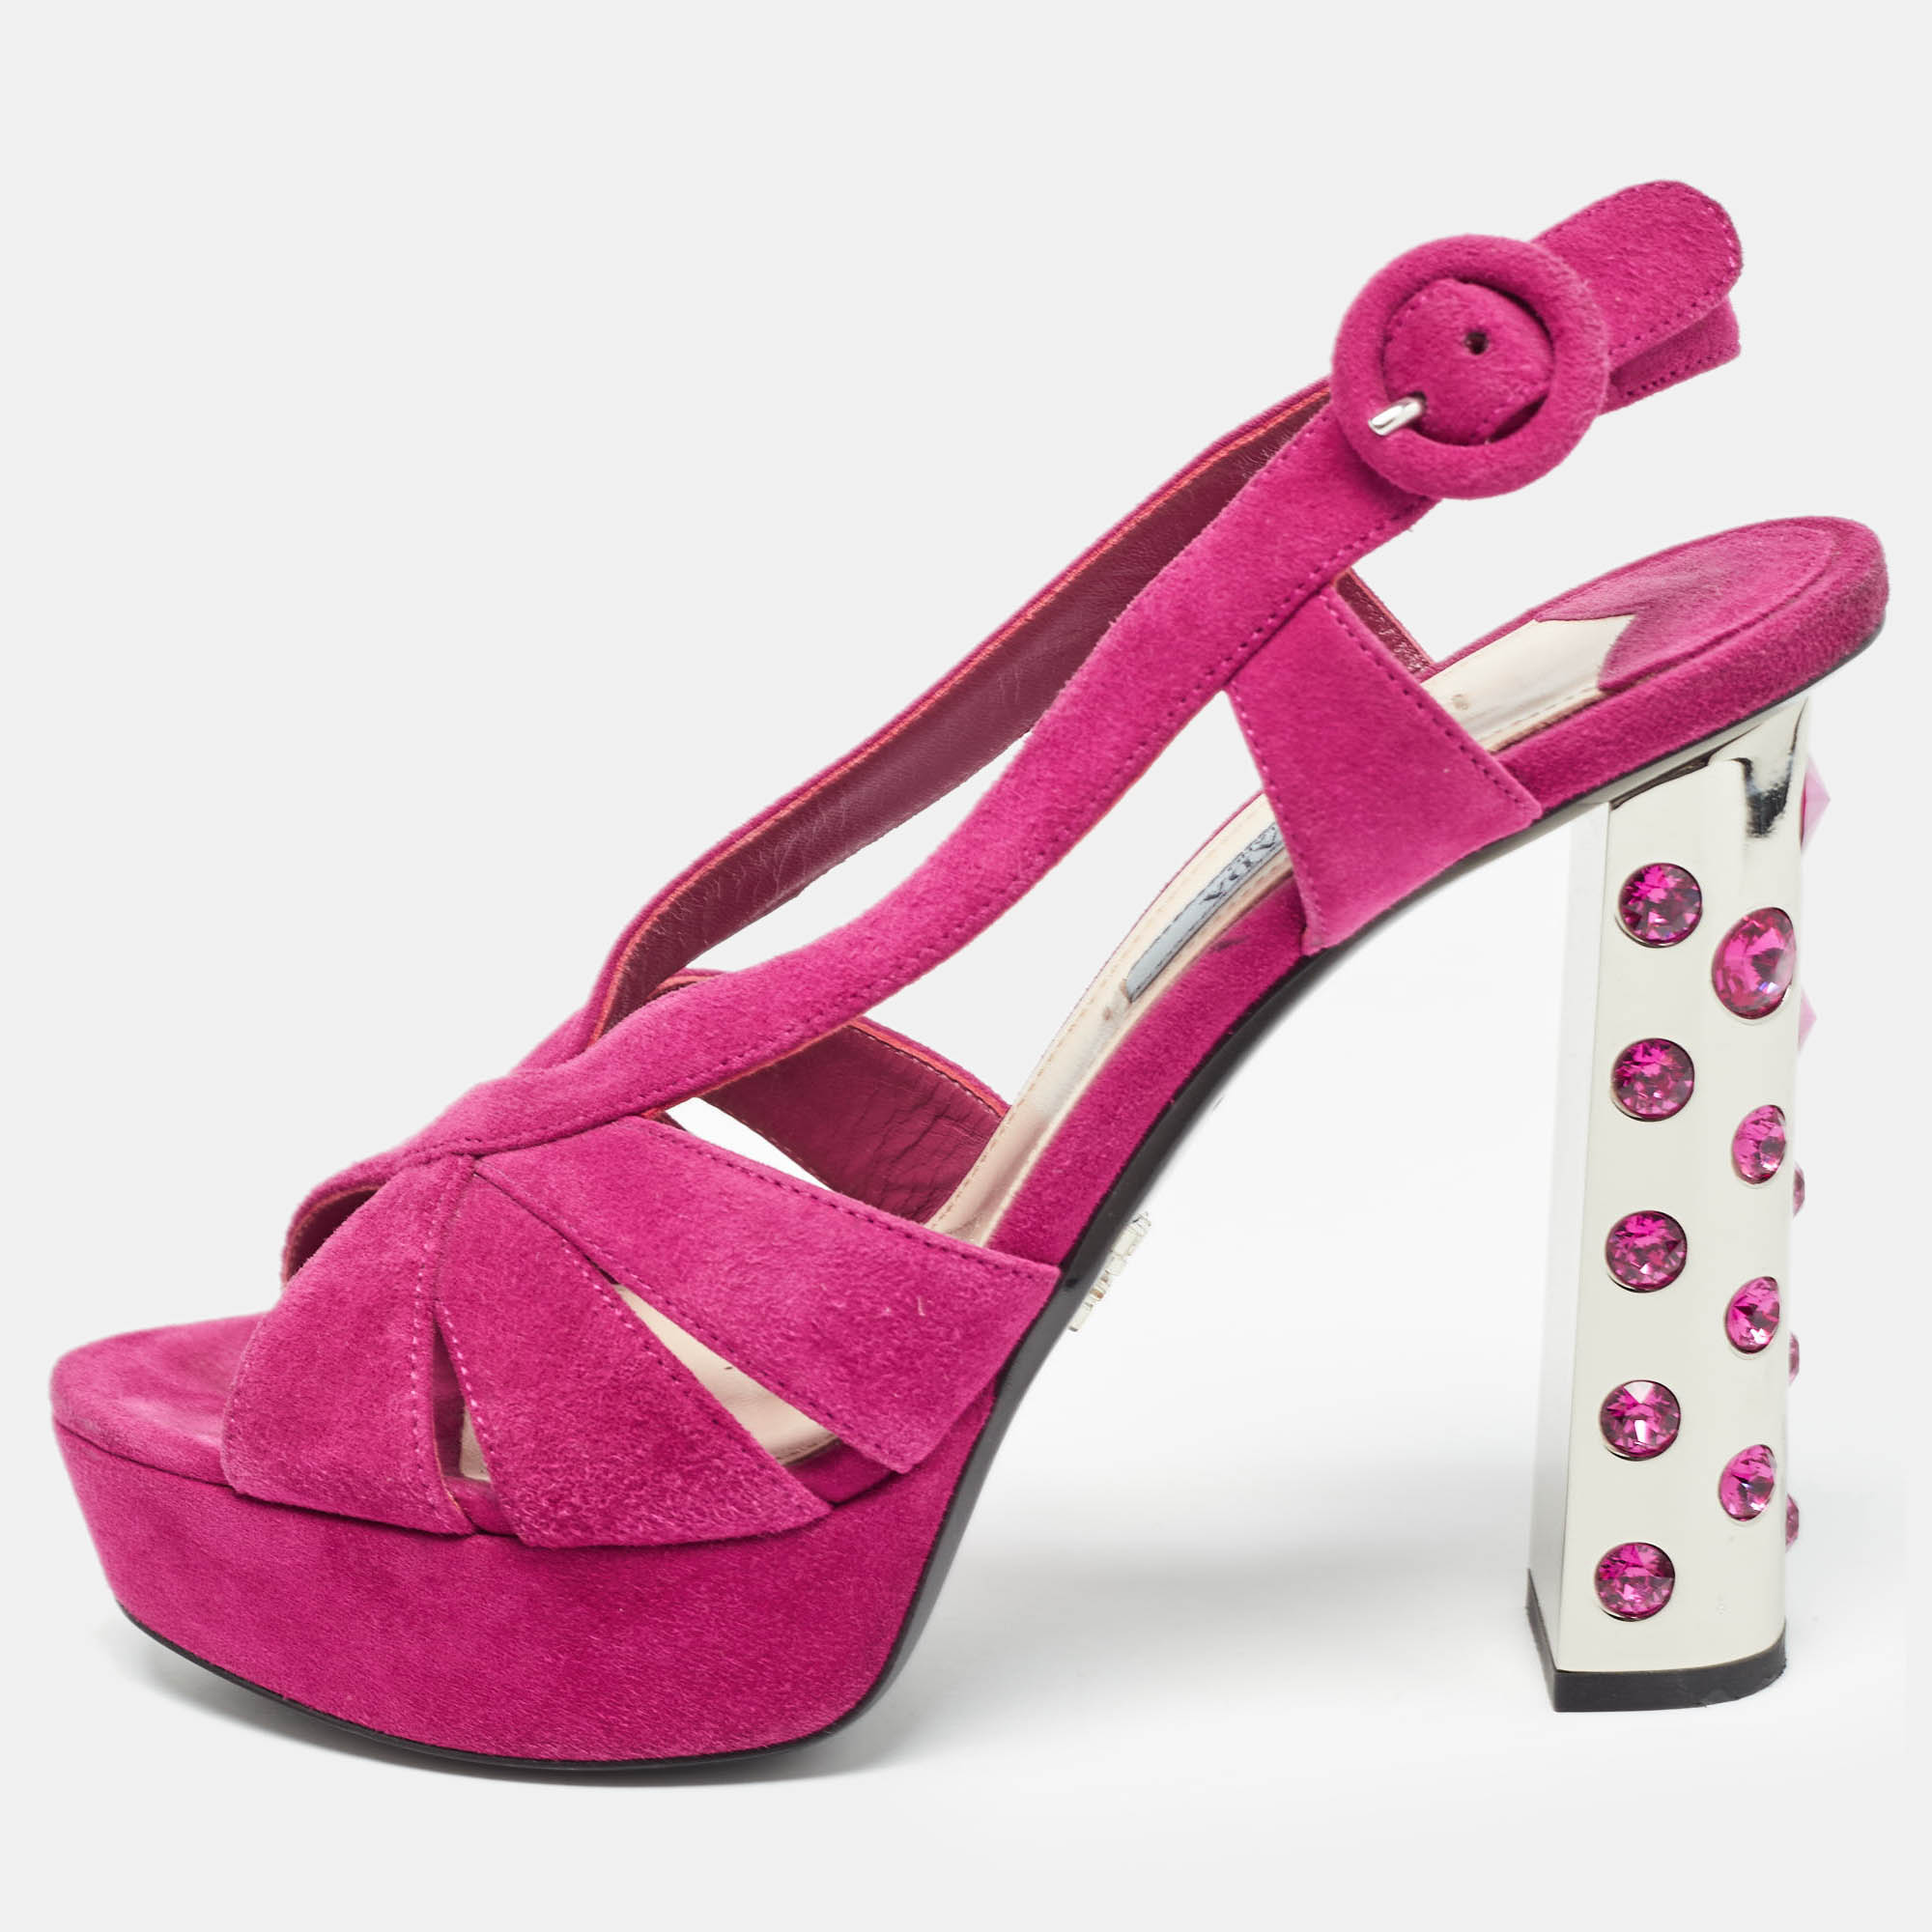 Prada fuchsia suede crystal embellished platform sandals size 36.5